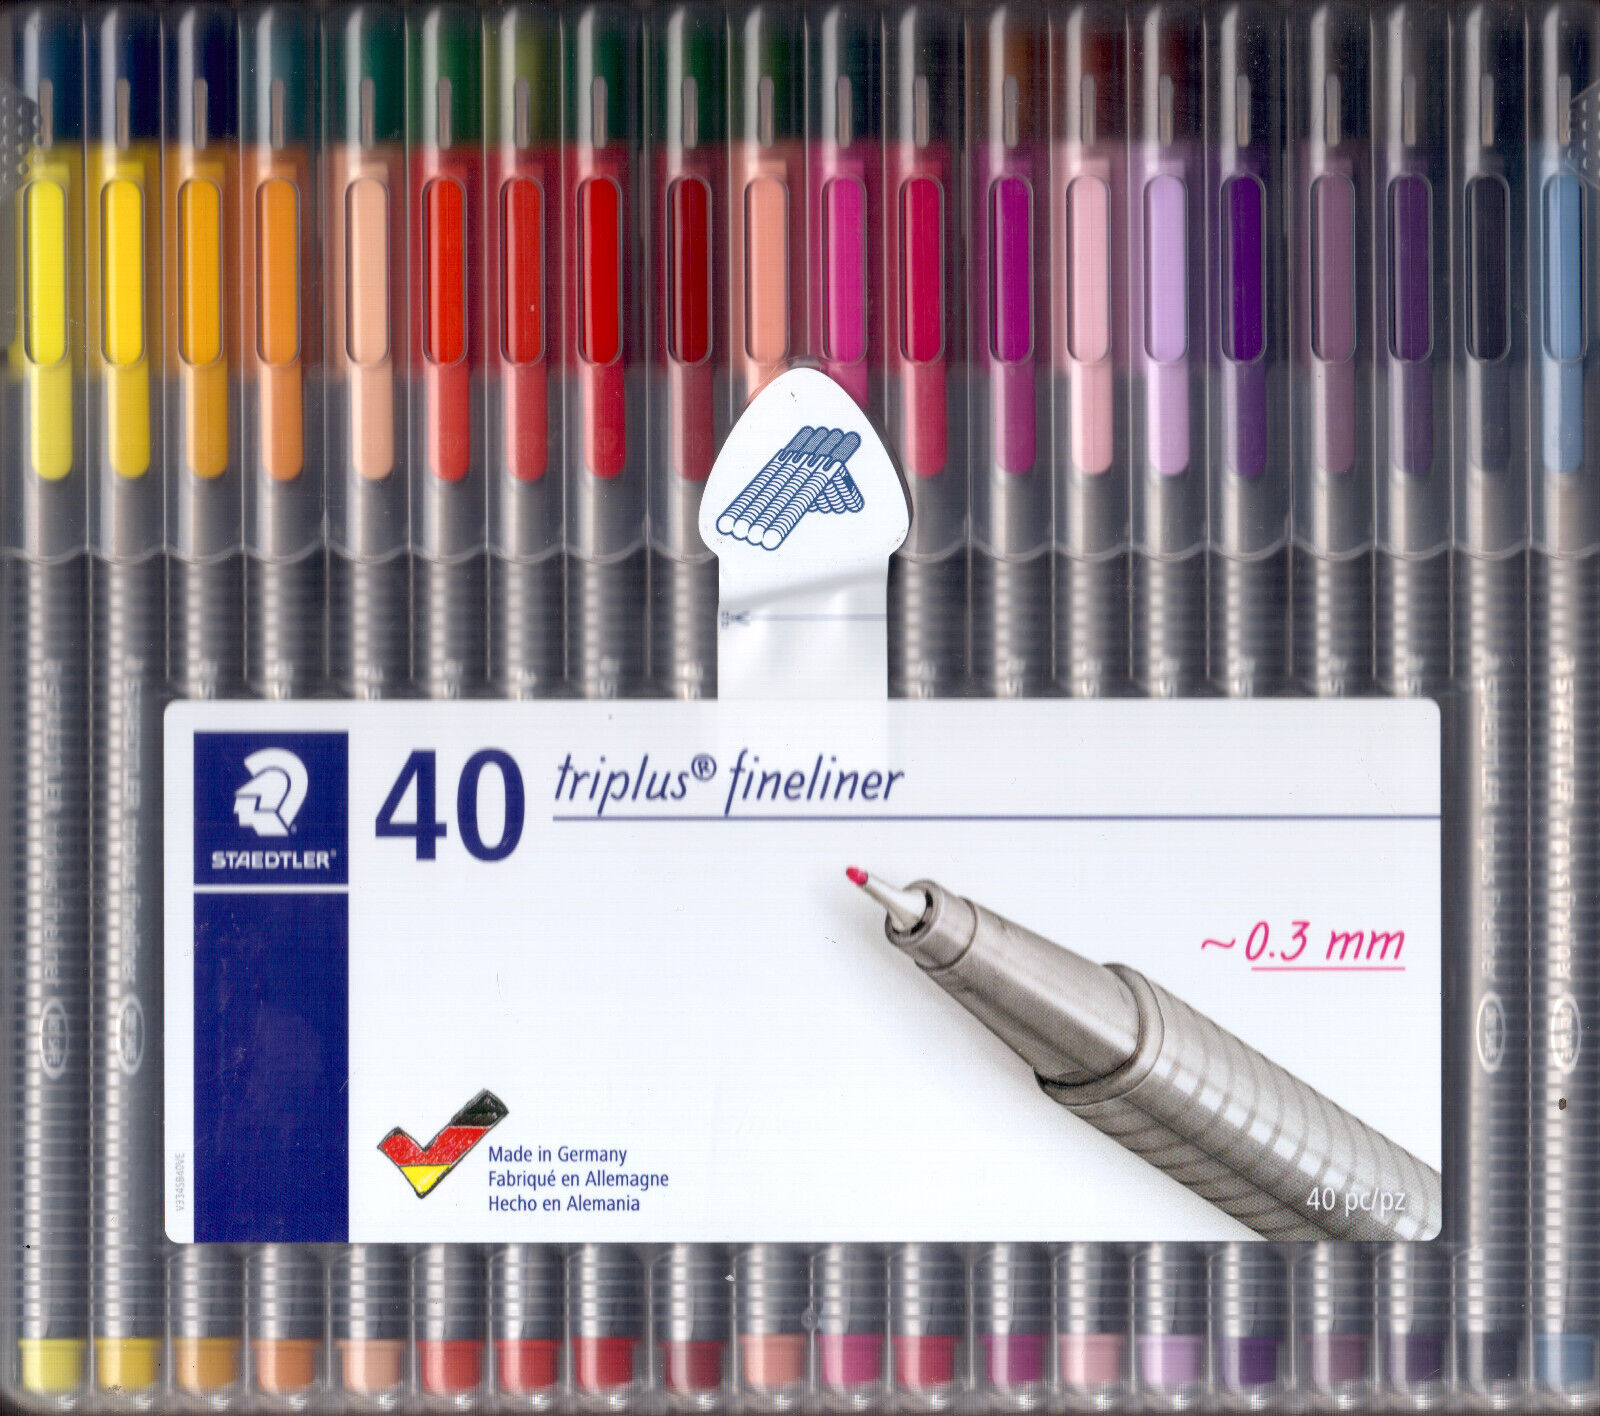 Staedtler 40 Triplus 0.3mm Fineliner Pens NEW GENUINE